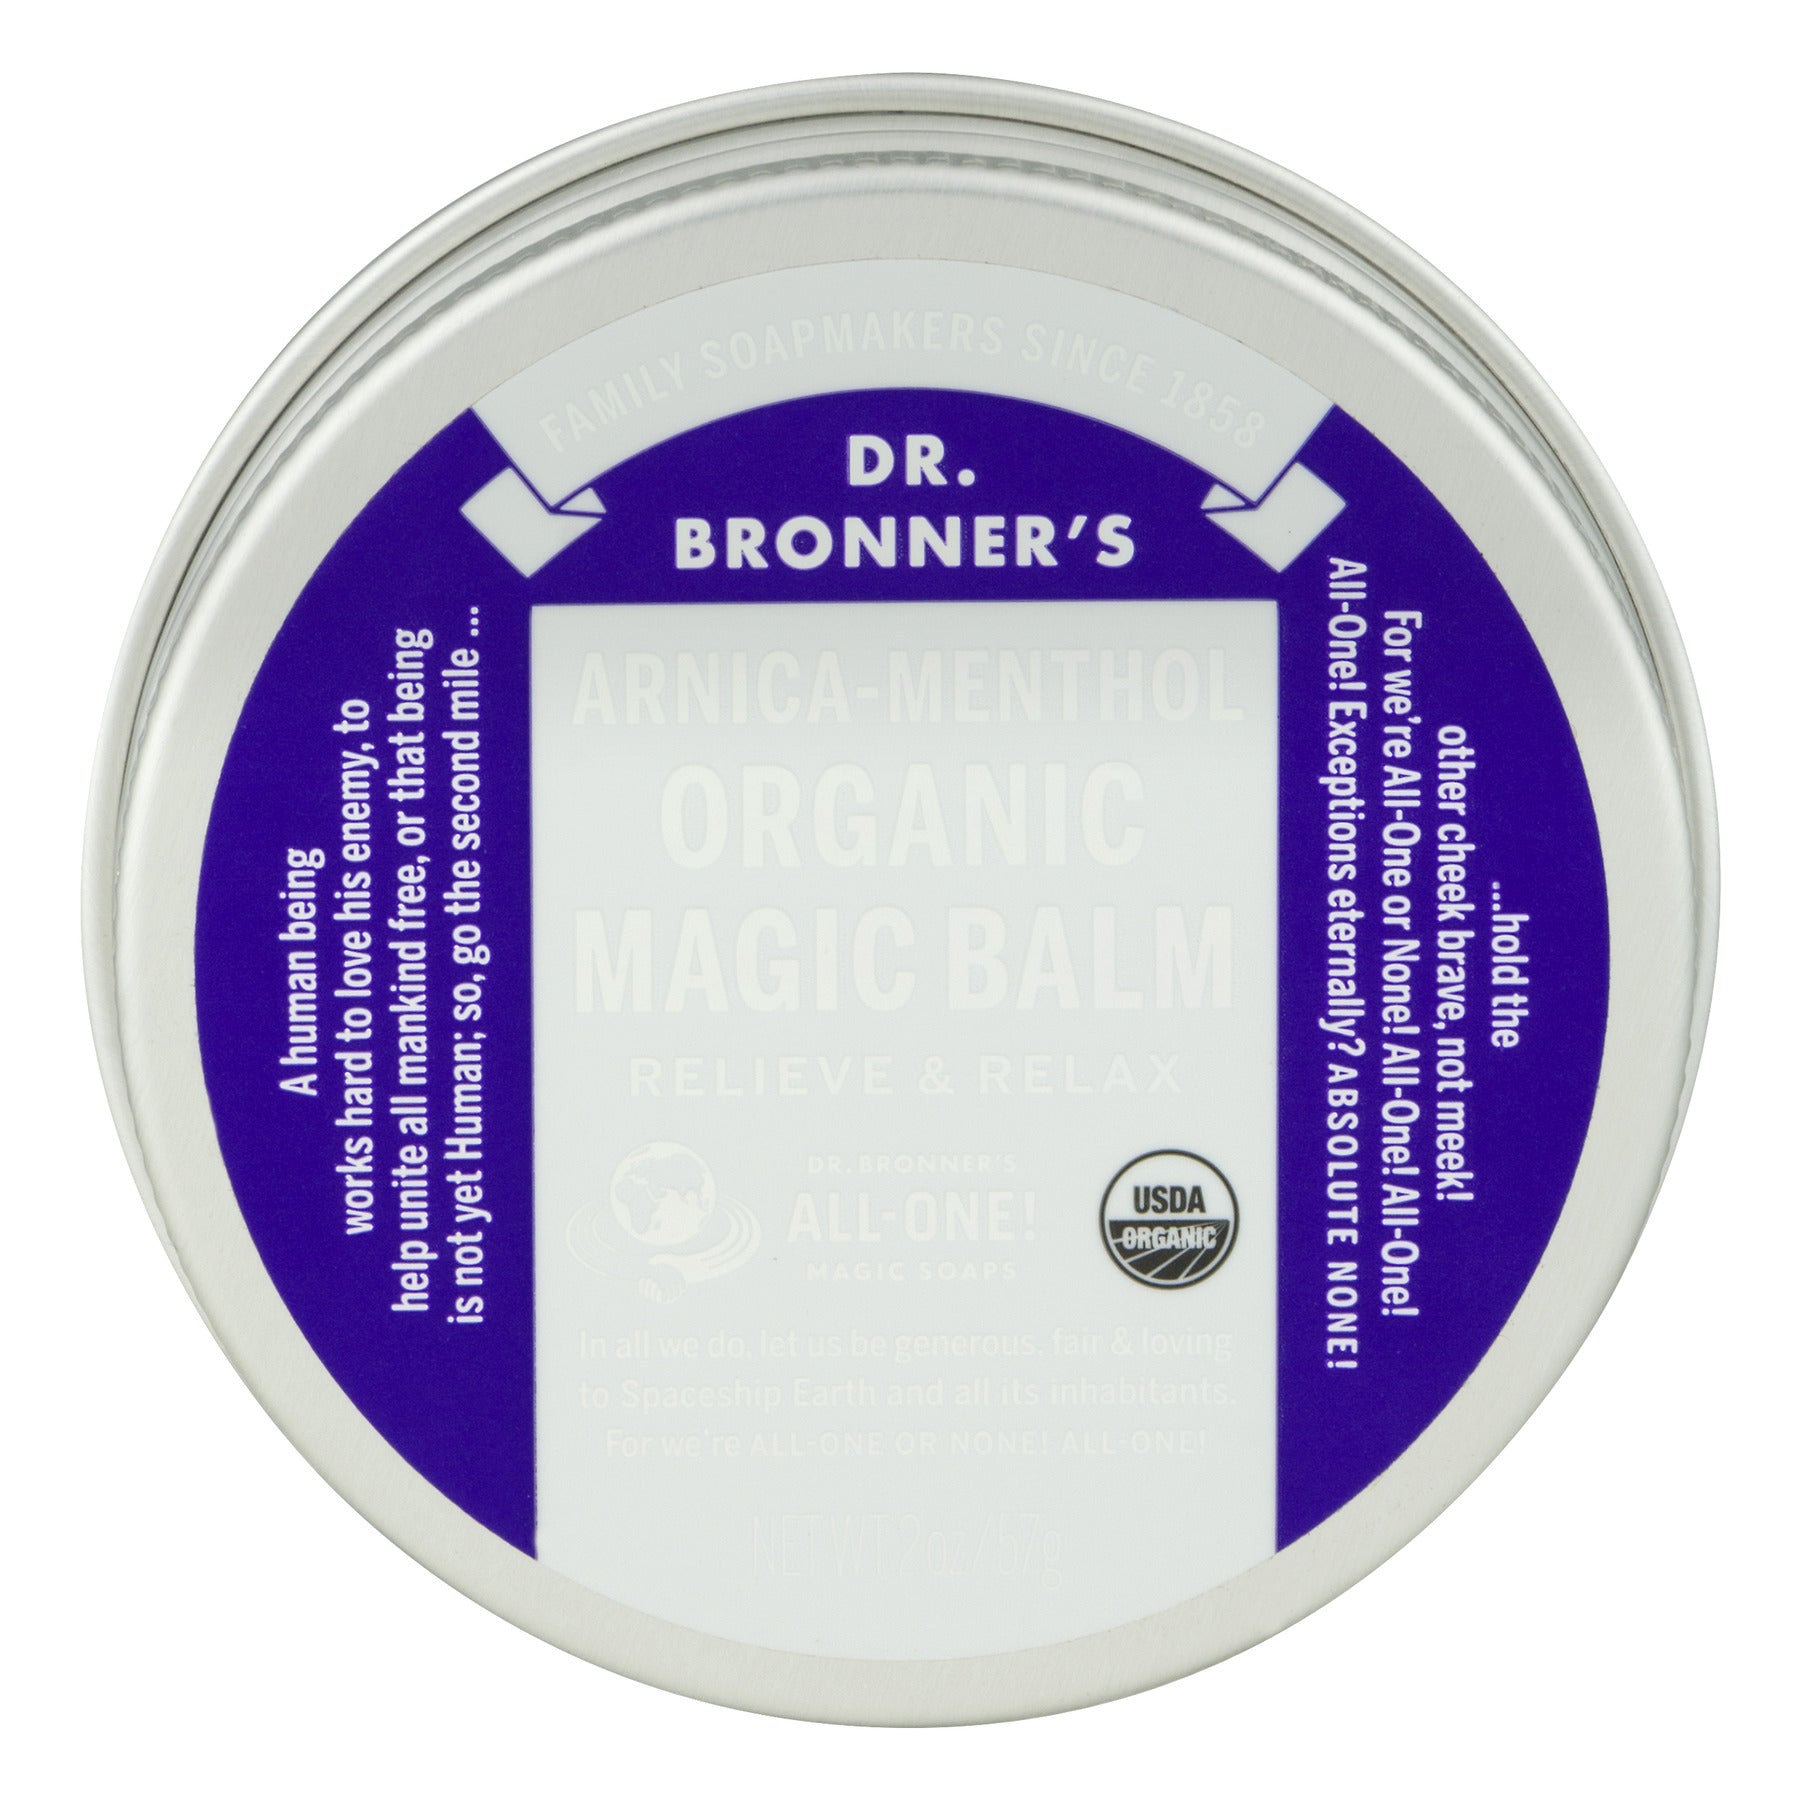 Dr. Bronner's Organic Magic Balm Arnica - Menthol, 2.0 oz | Pack of 6